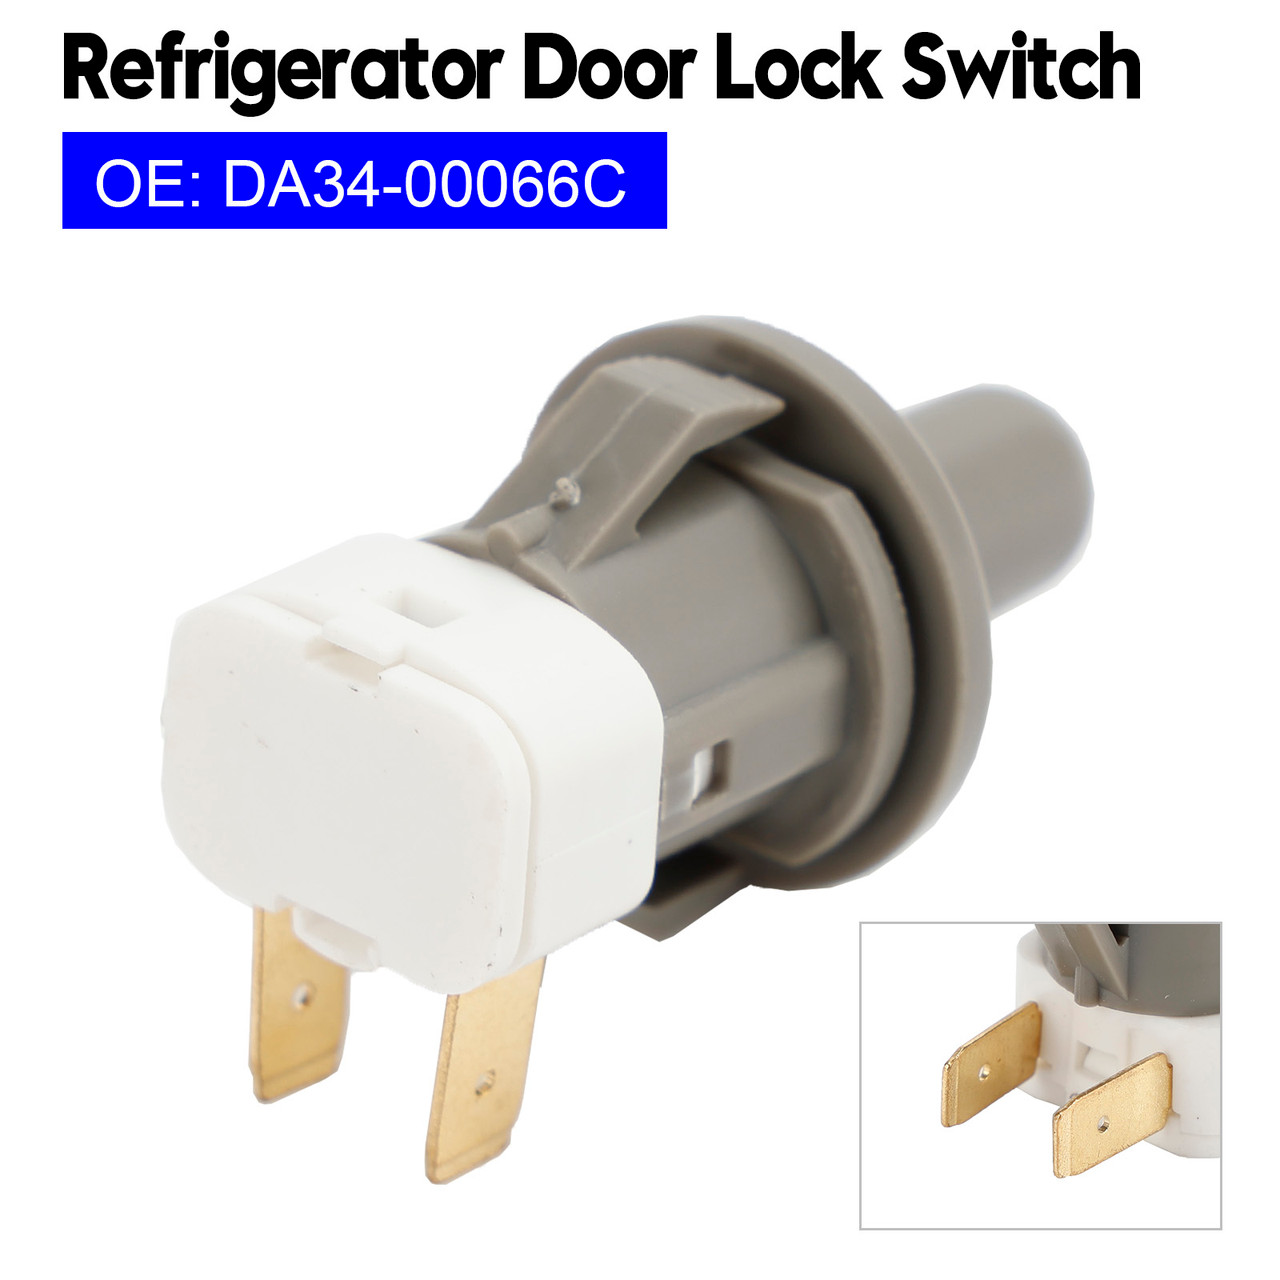 Door Lock Switch DA34-00066C Replacement For SAMSUNG Refrigerator